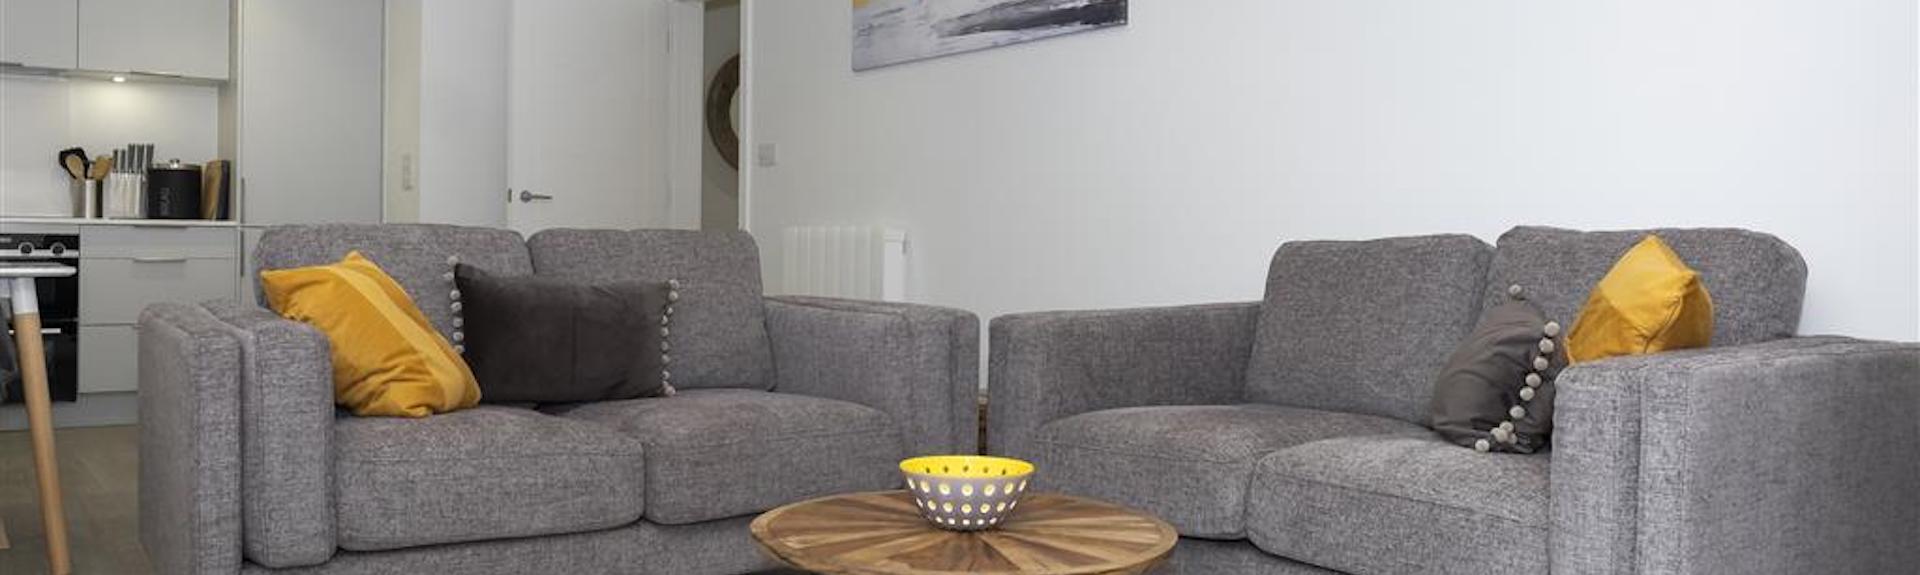 Comfortable cotton sofas in an open-plan living area